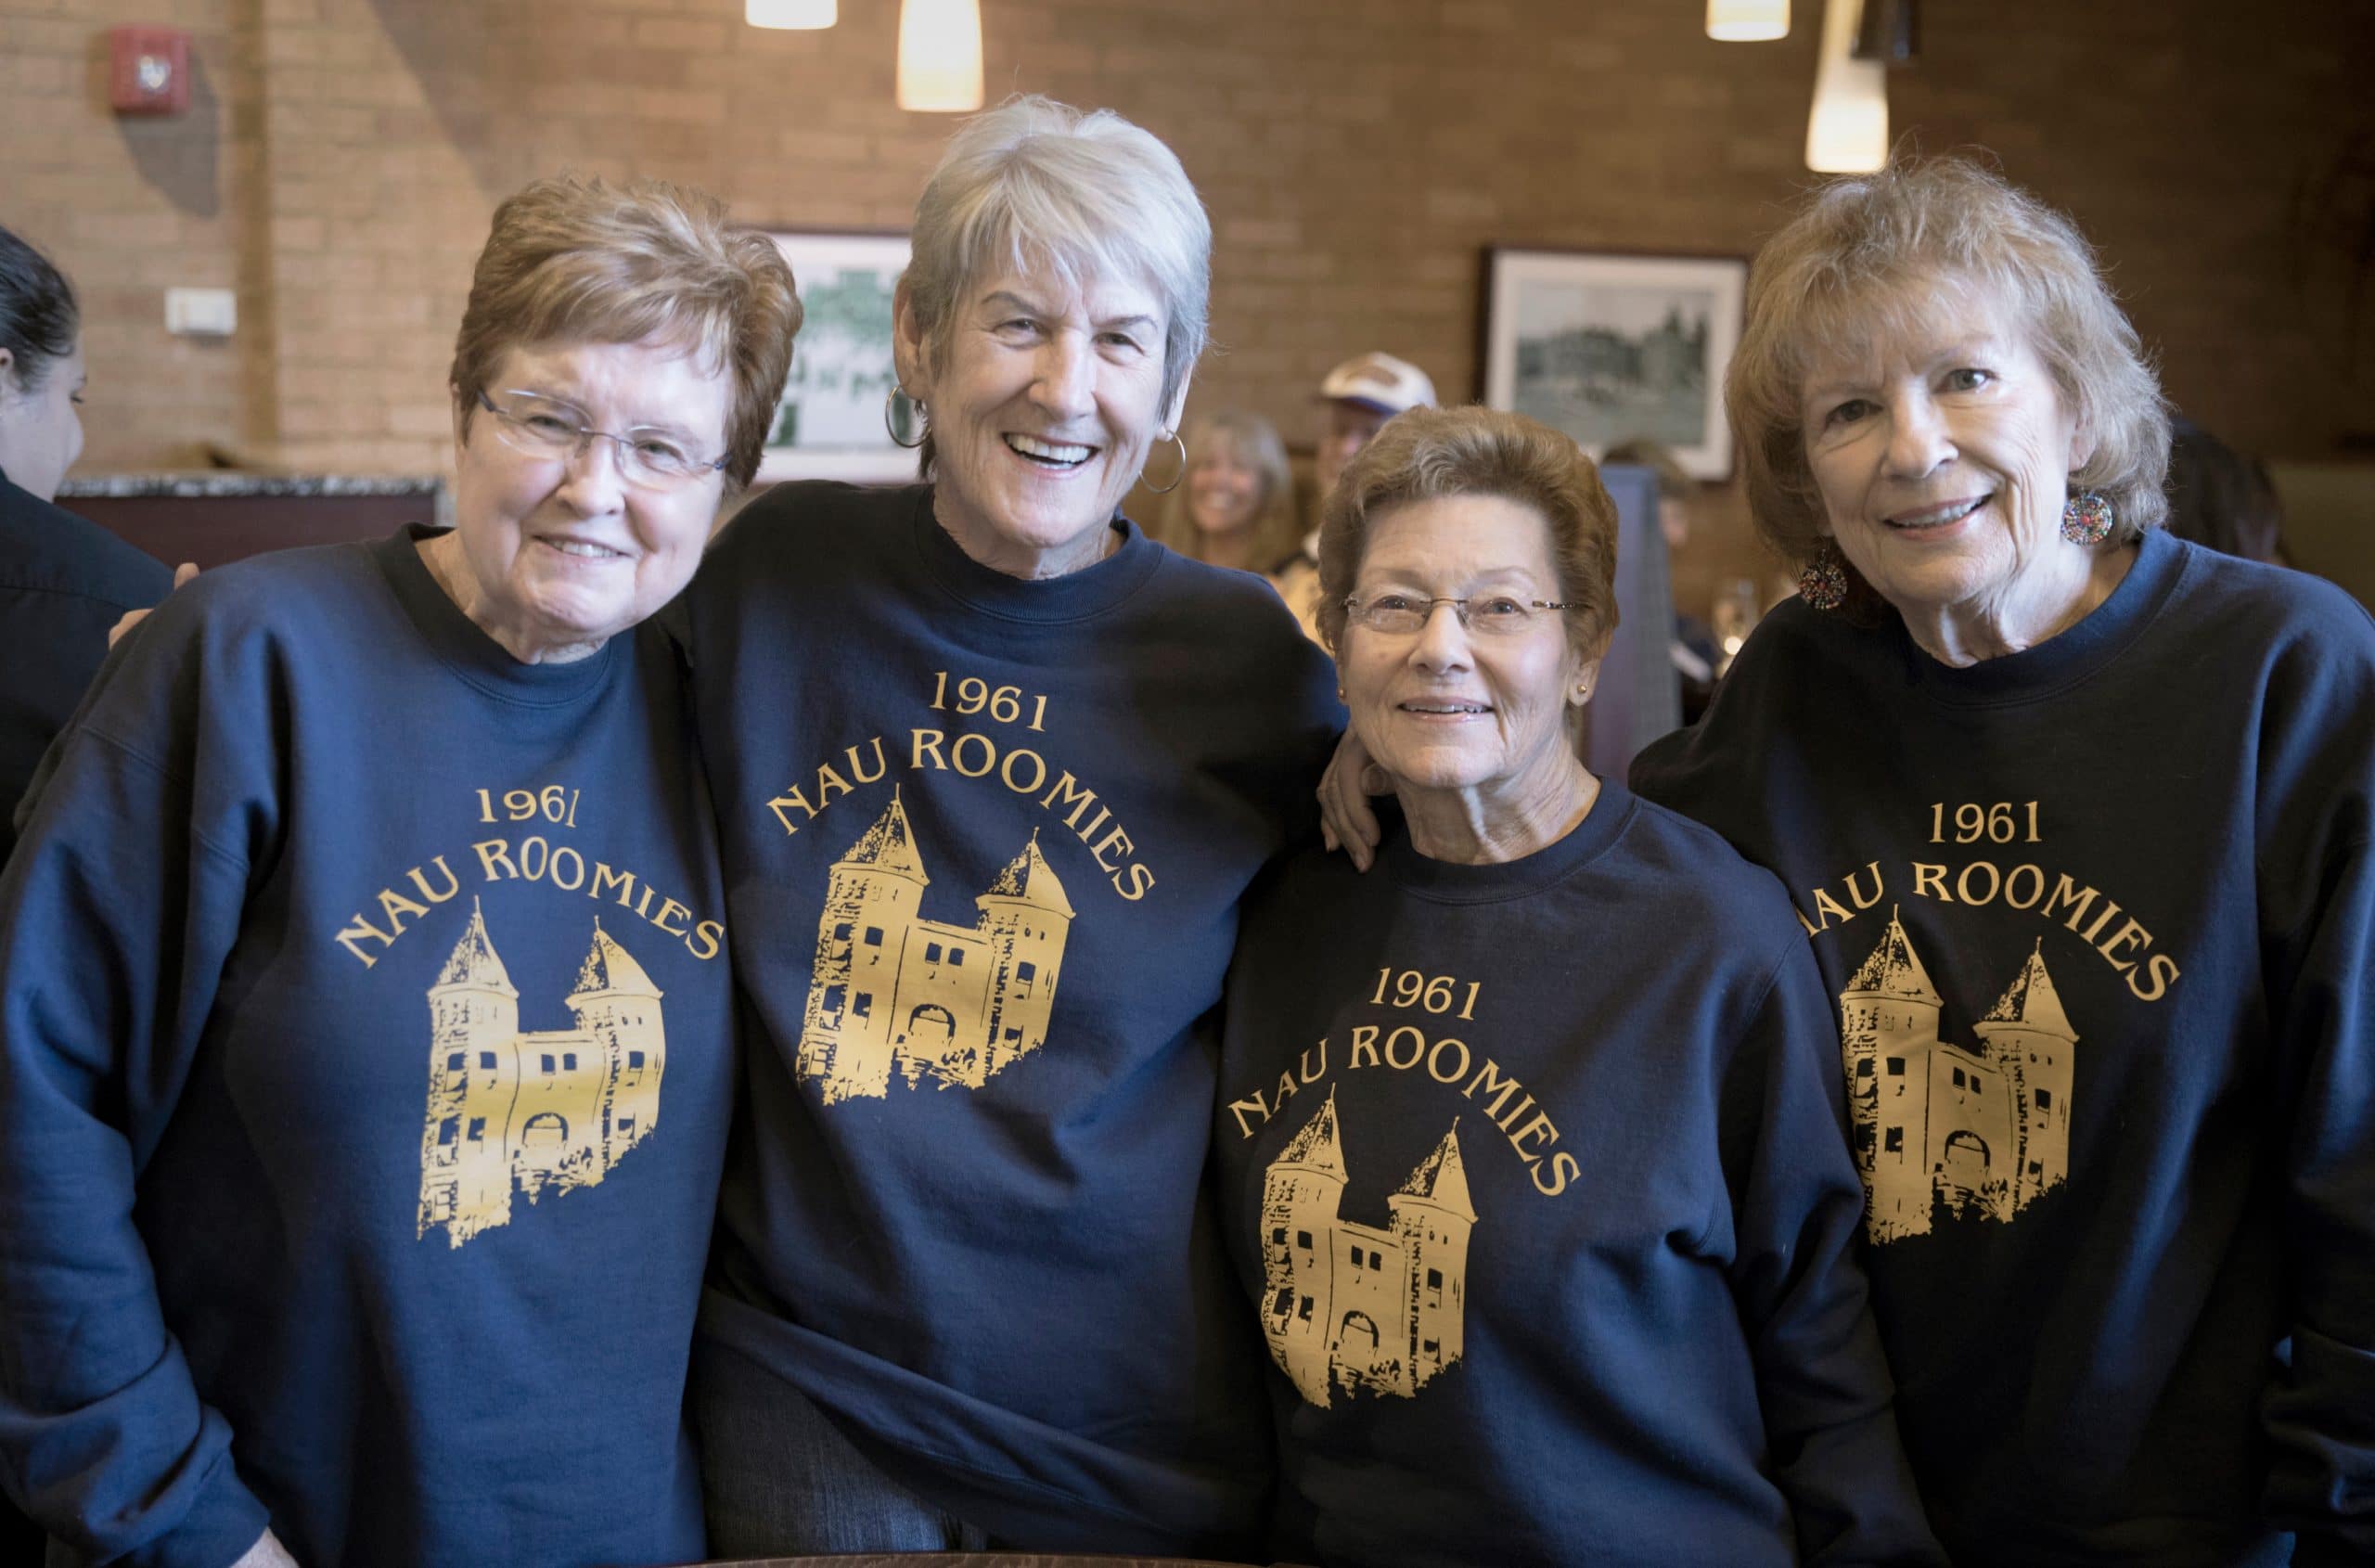 Alumni stand together wearing matching 1961 NAU roomies shirts.